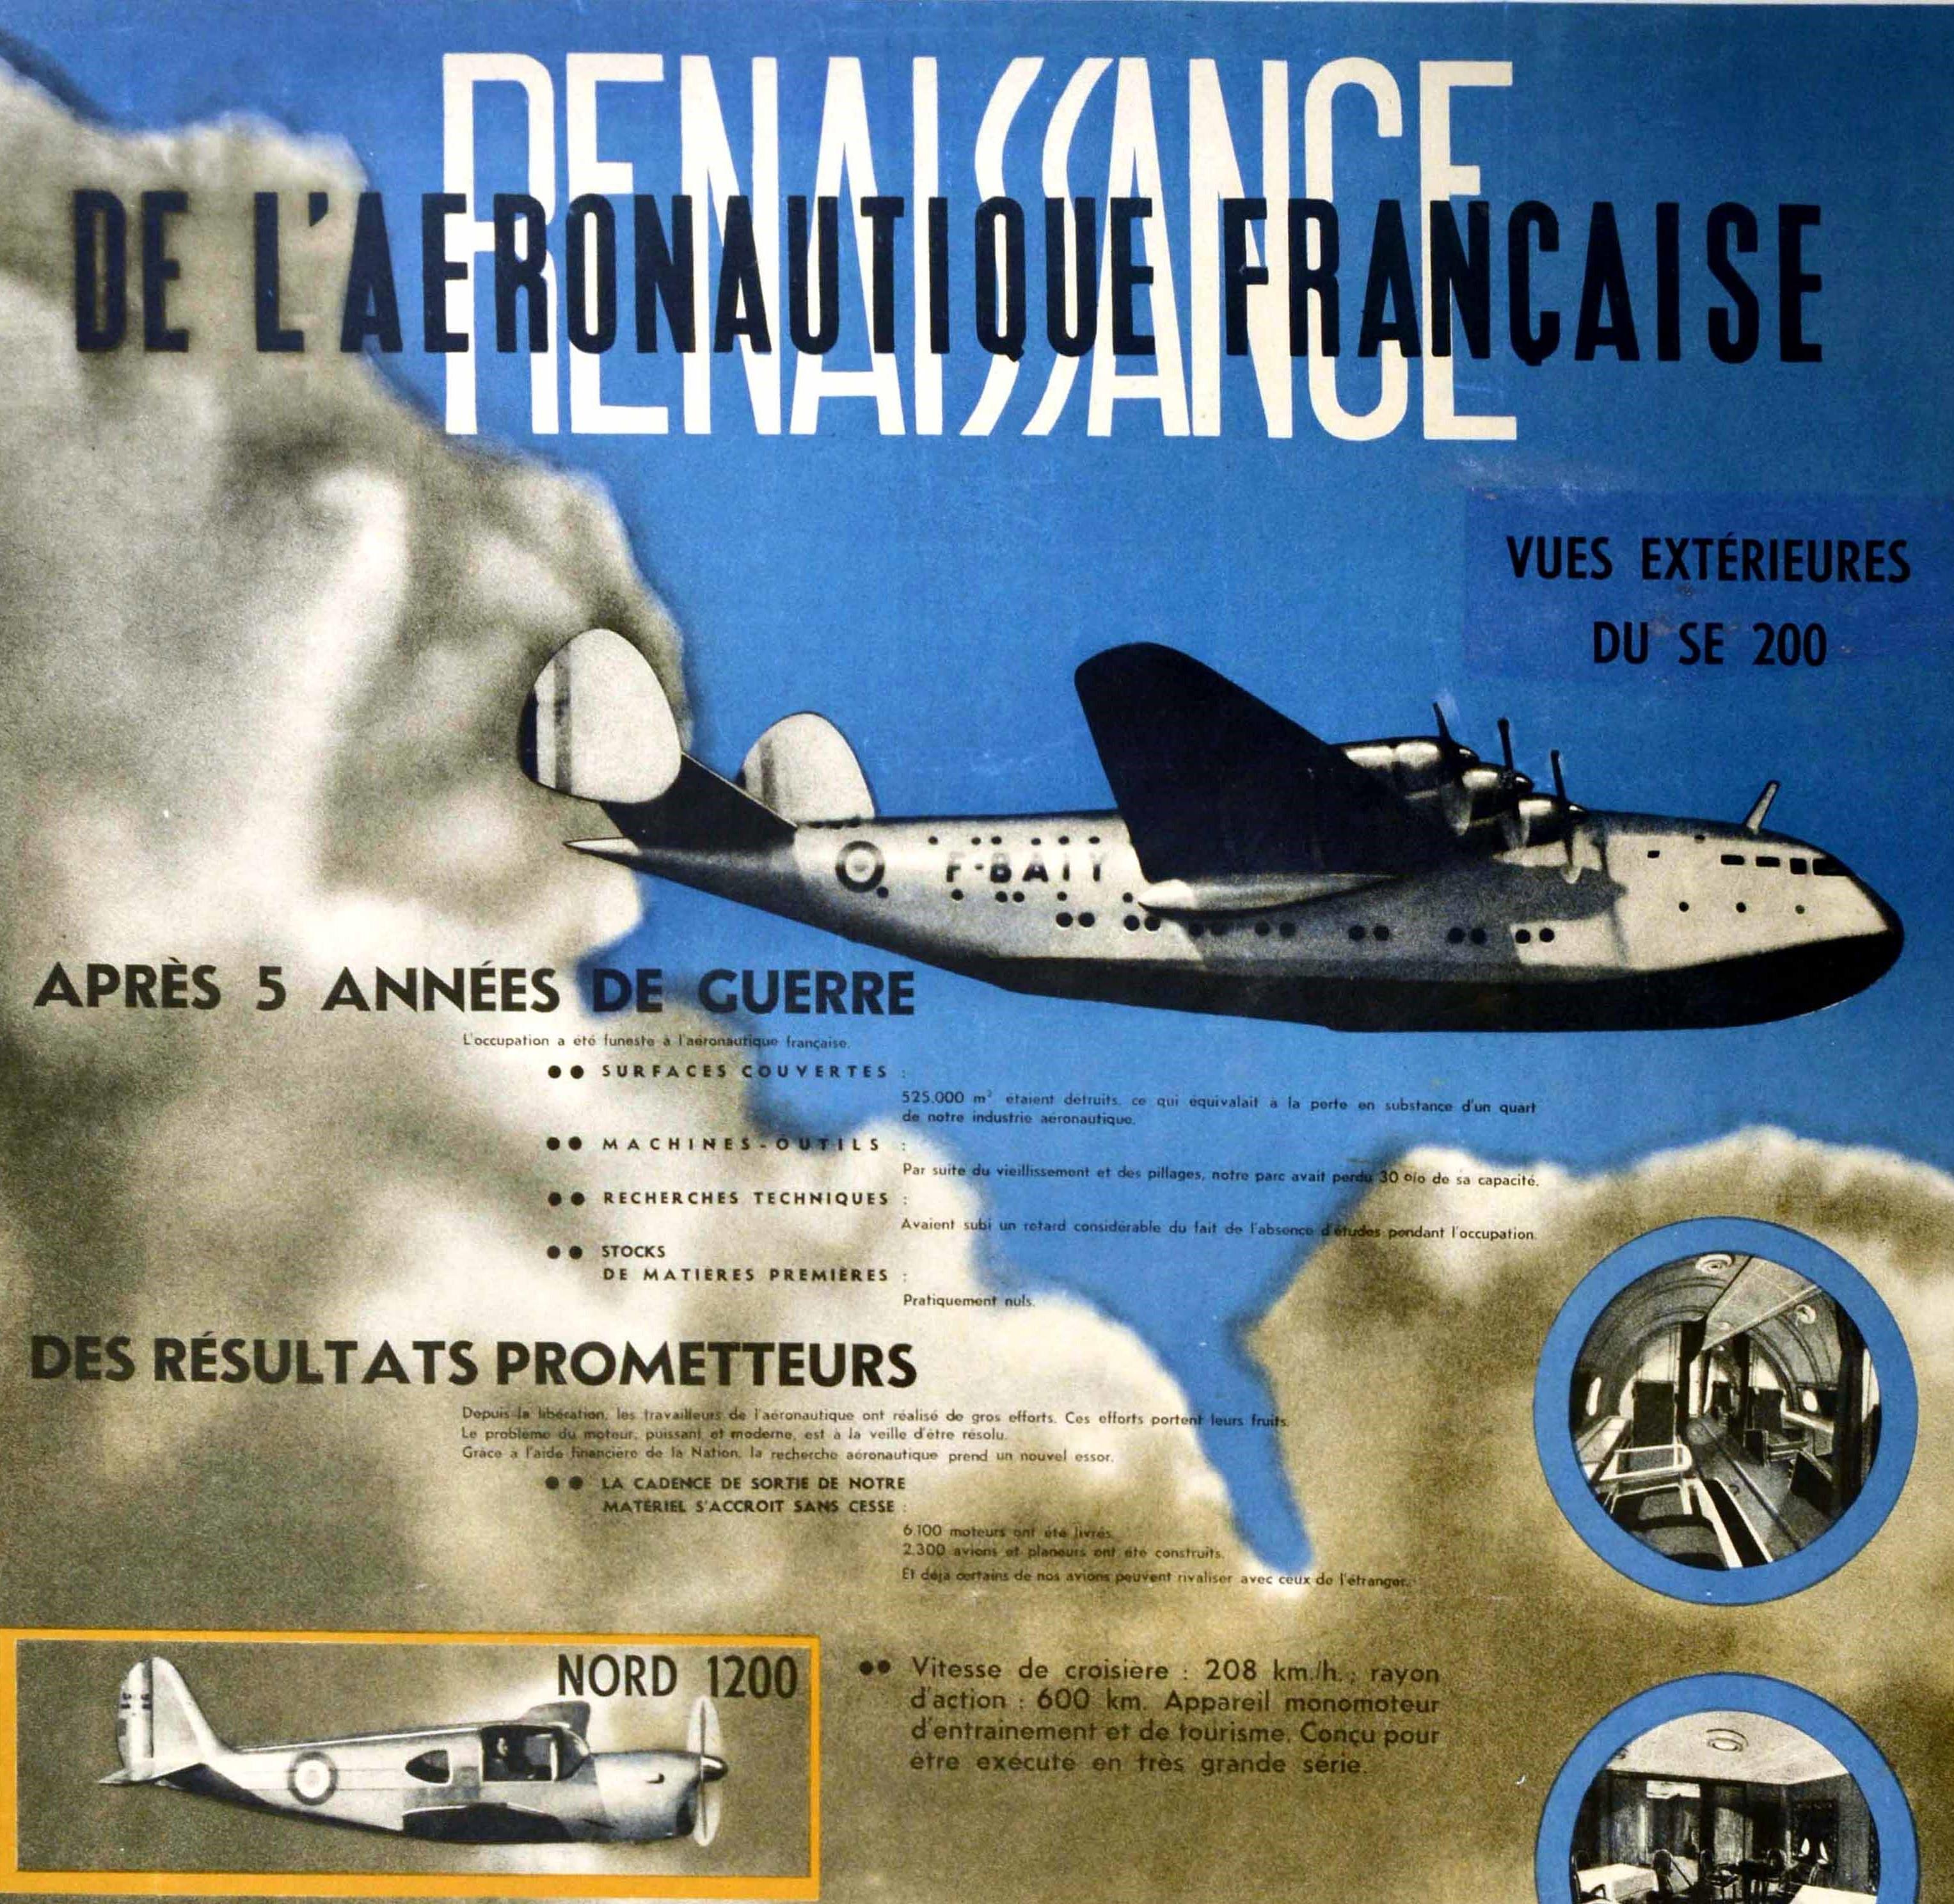 Original Vintage Poster Renaissance French Aeronautics Military Air Force Planes - Print by Unknown